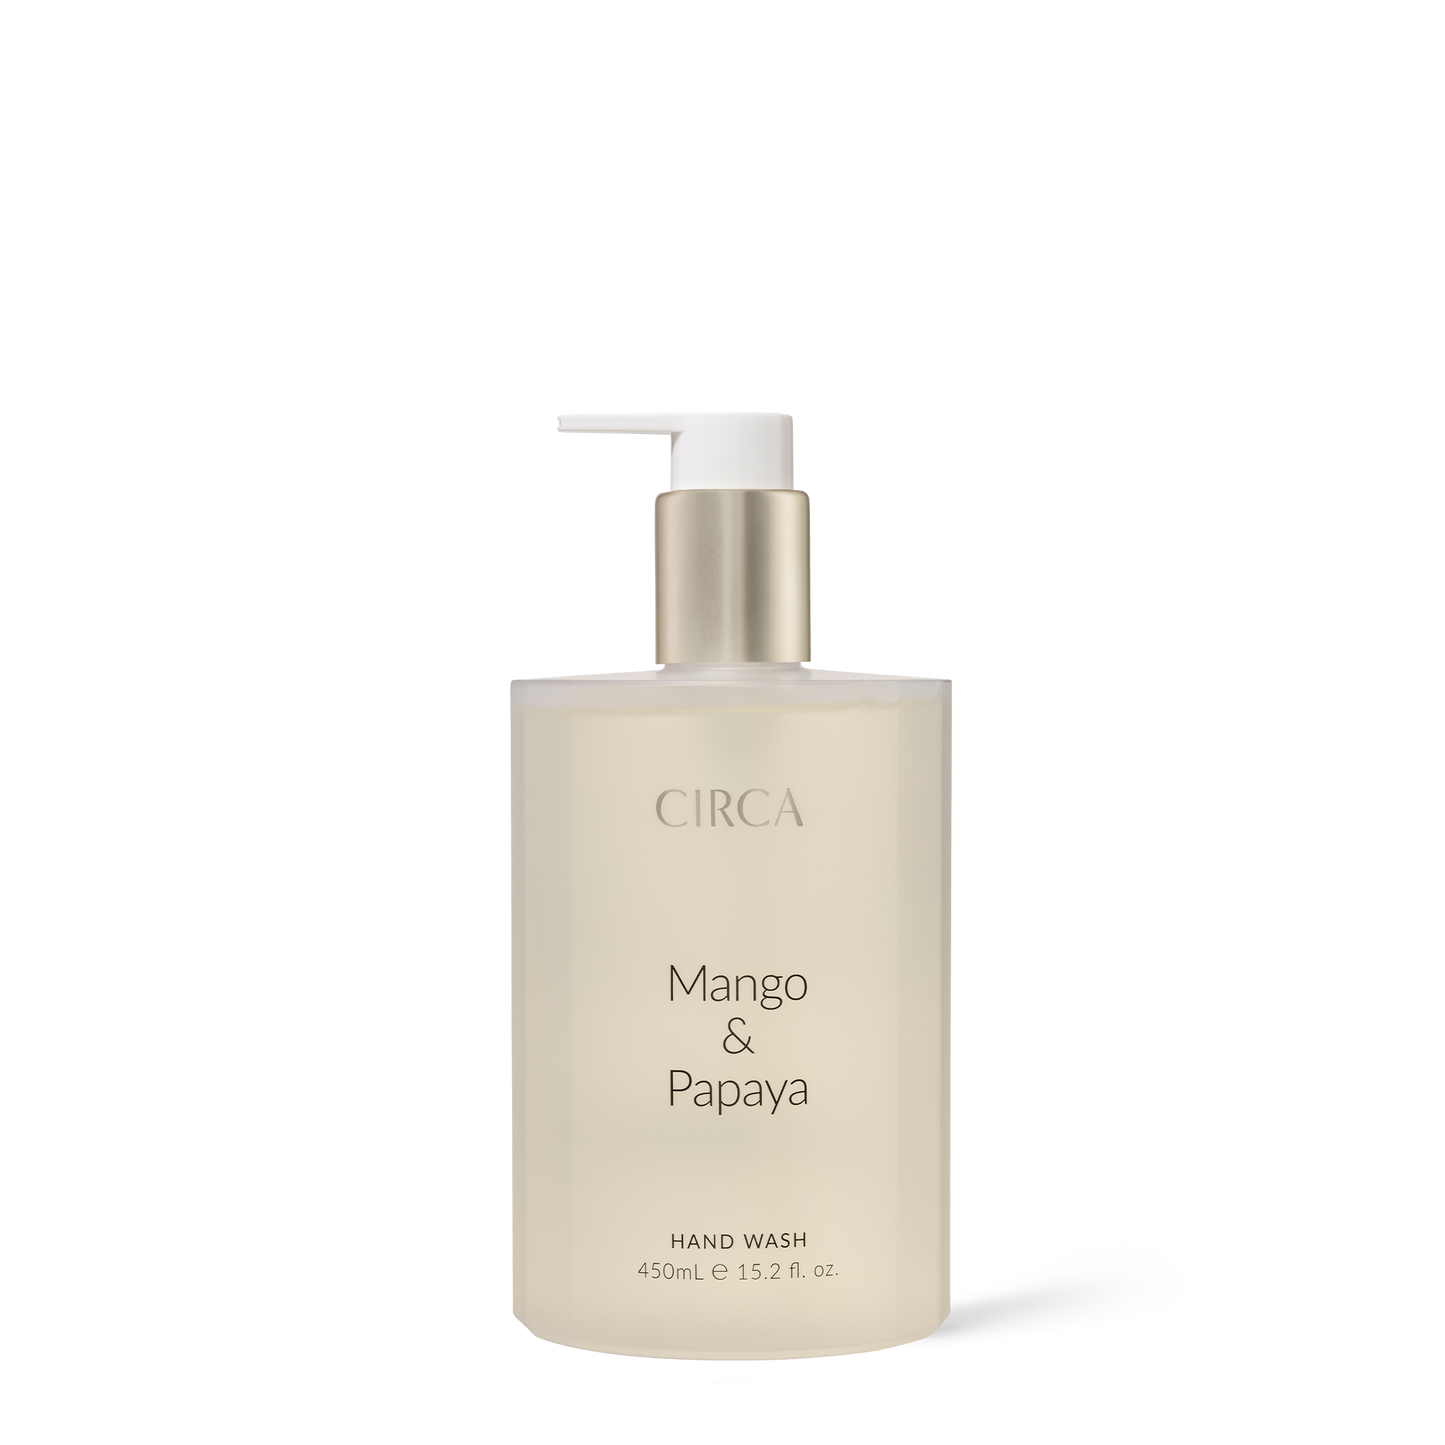 Mango & Papaya Hand Wash 450ml - CIRCA